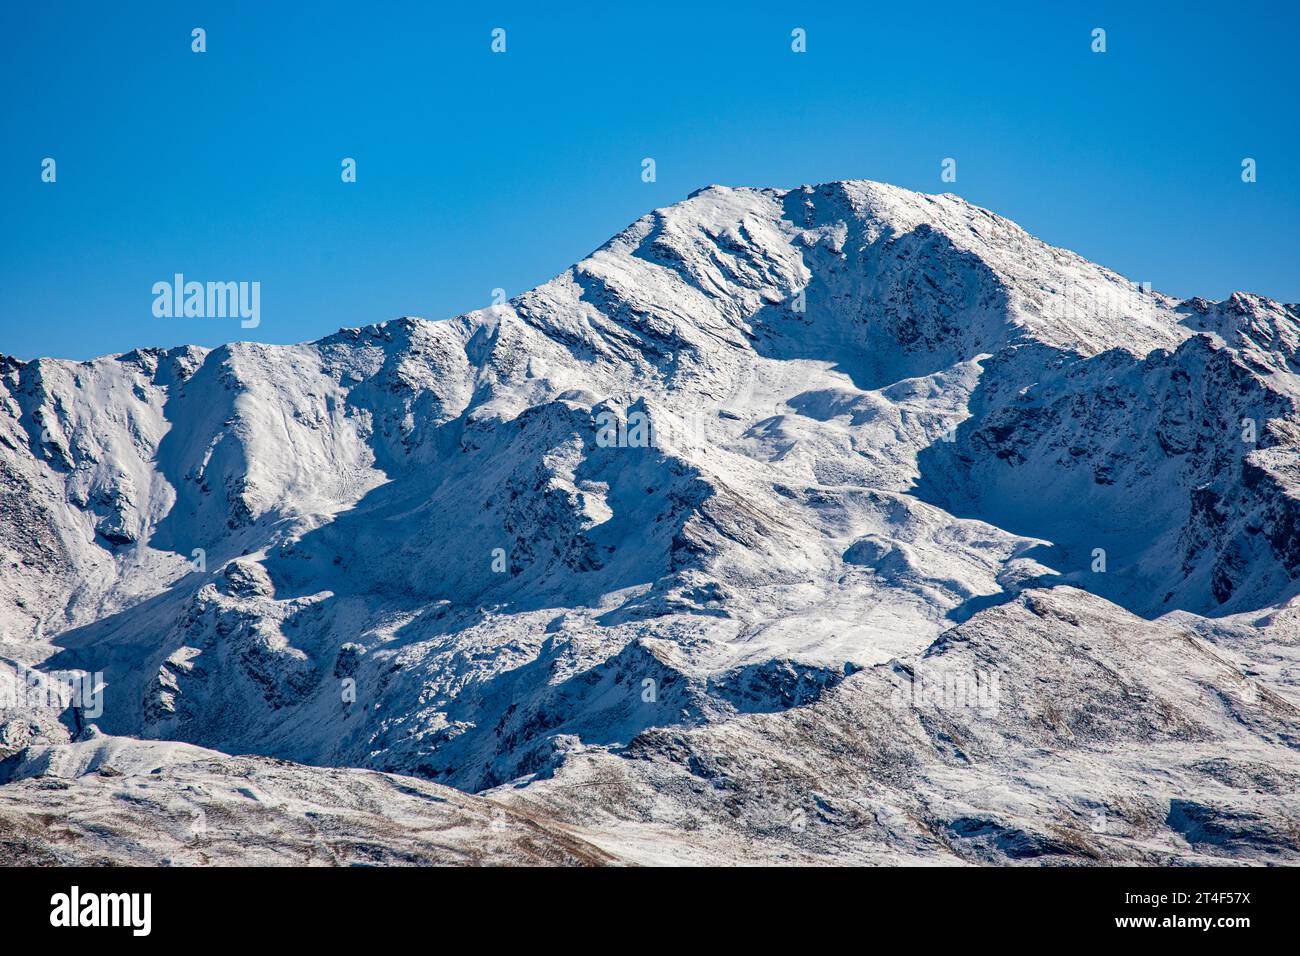 Snowy Mountain Pischahorn in Swiss Alps, Silvretta Alps, located east of Davos, in the Swiss canton of Graubuenden, Switzerland Stock Photo